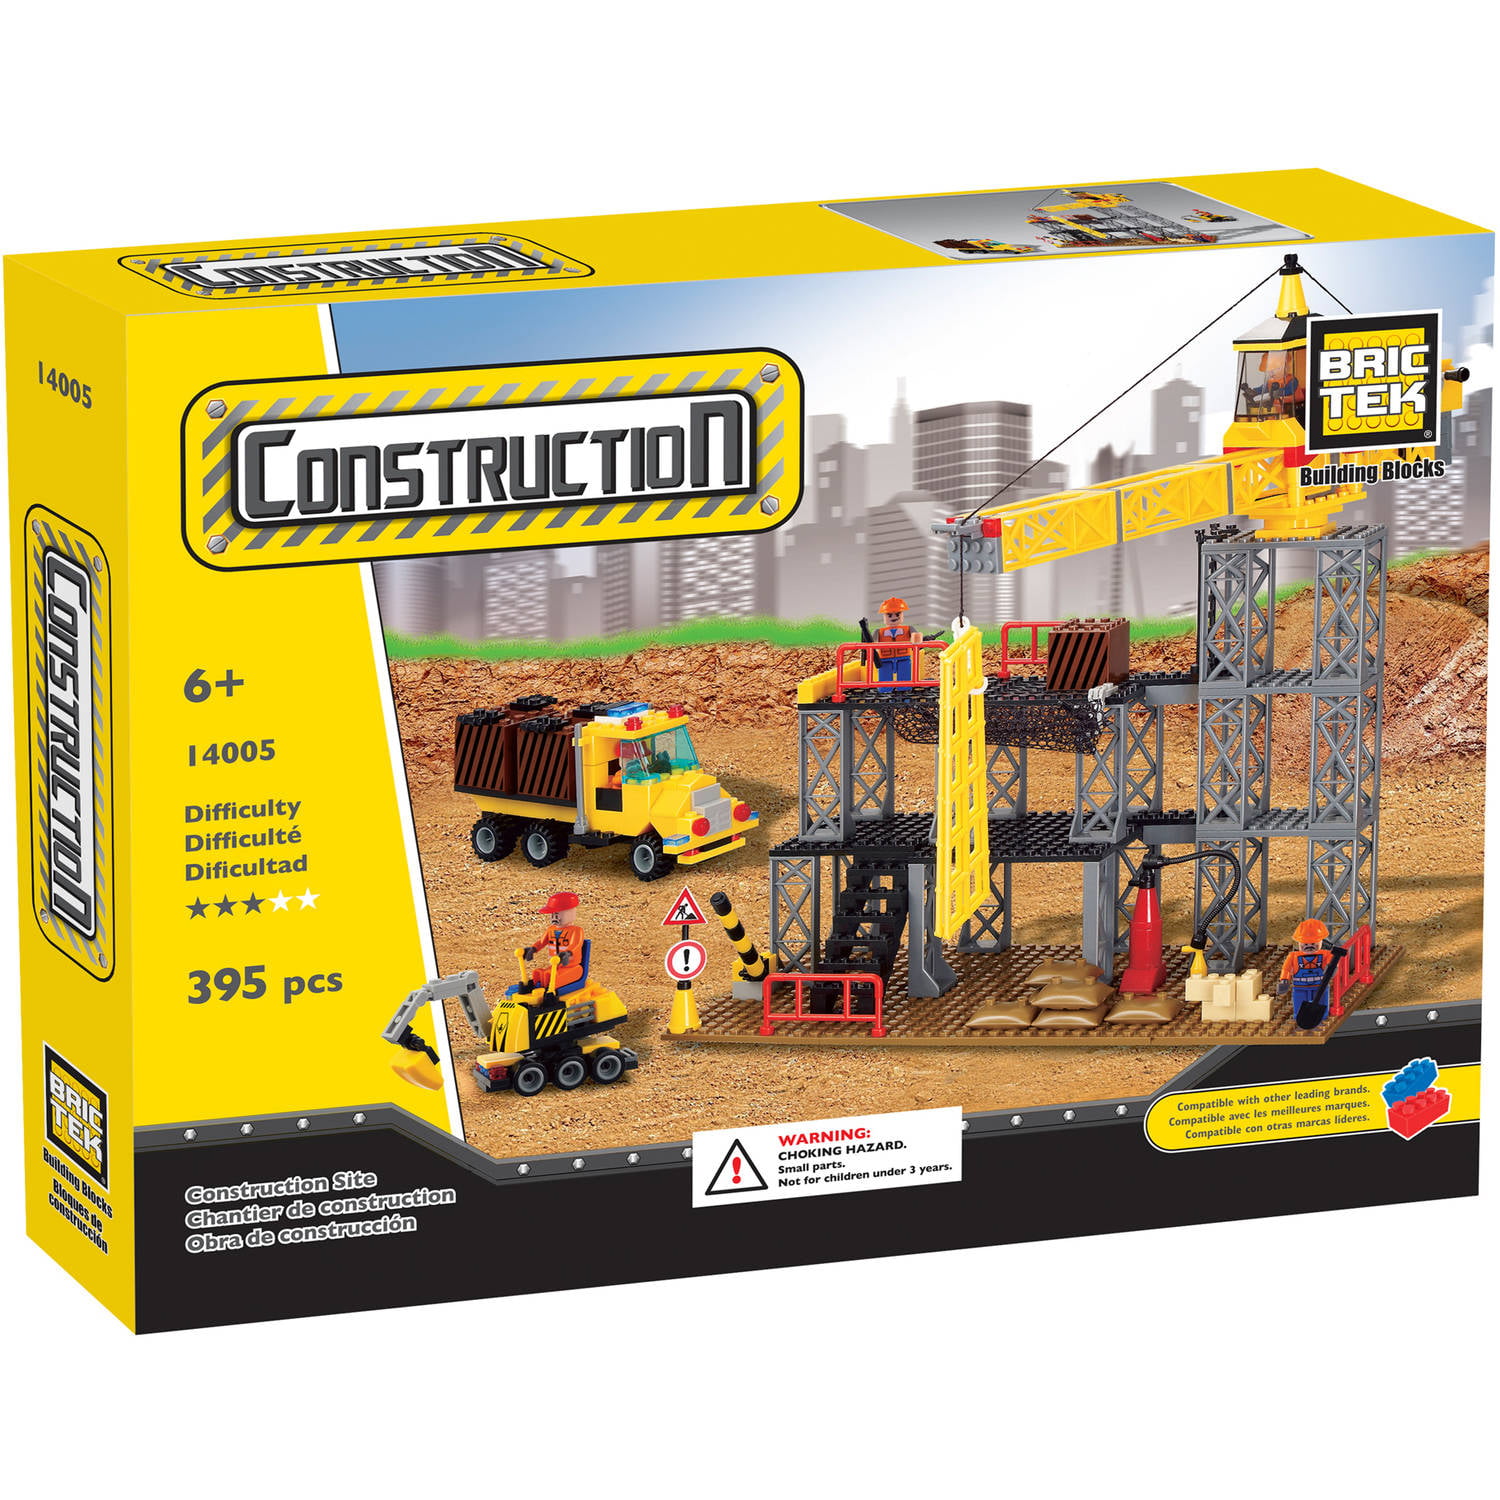 2 Mini Racers BricTek Construction Building Toy Block Brick Bric Tek 21508 